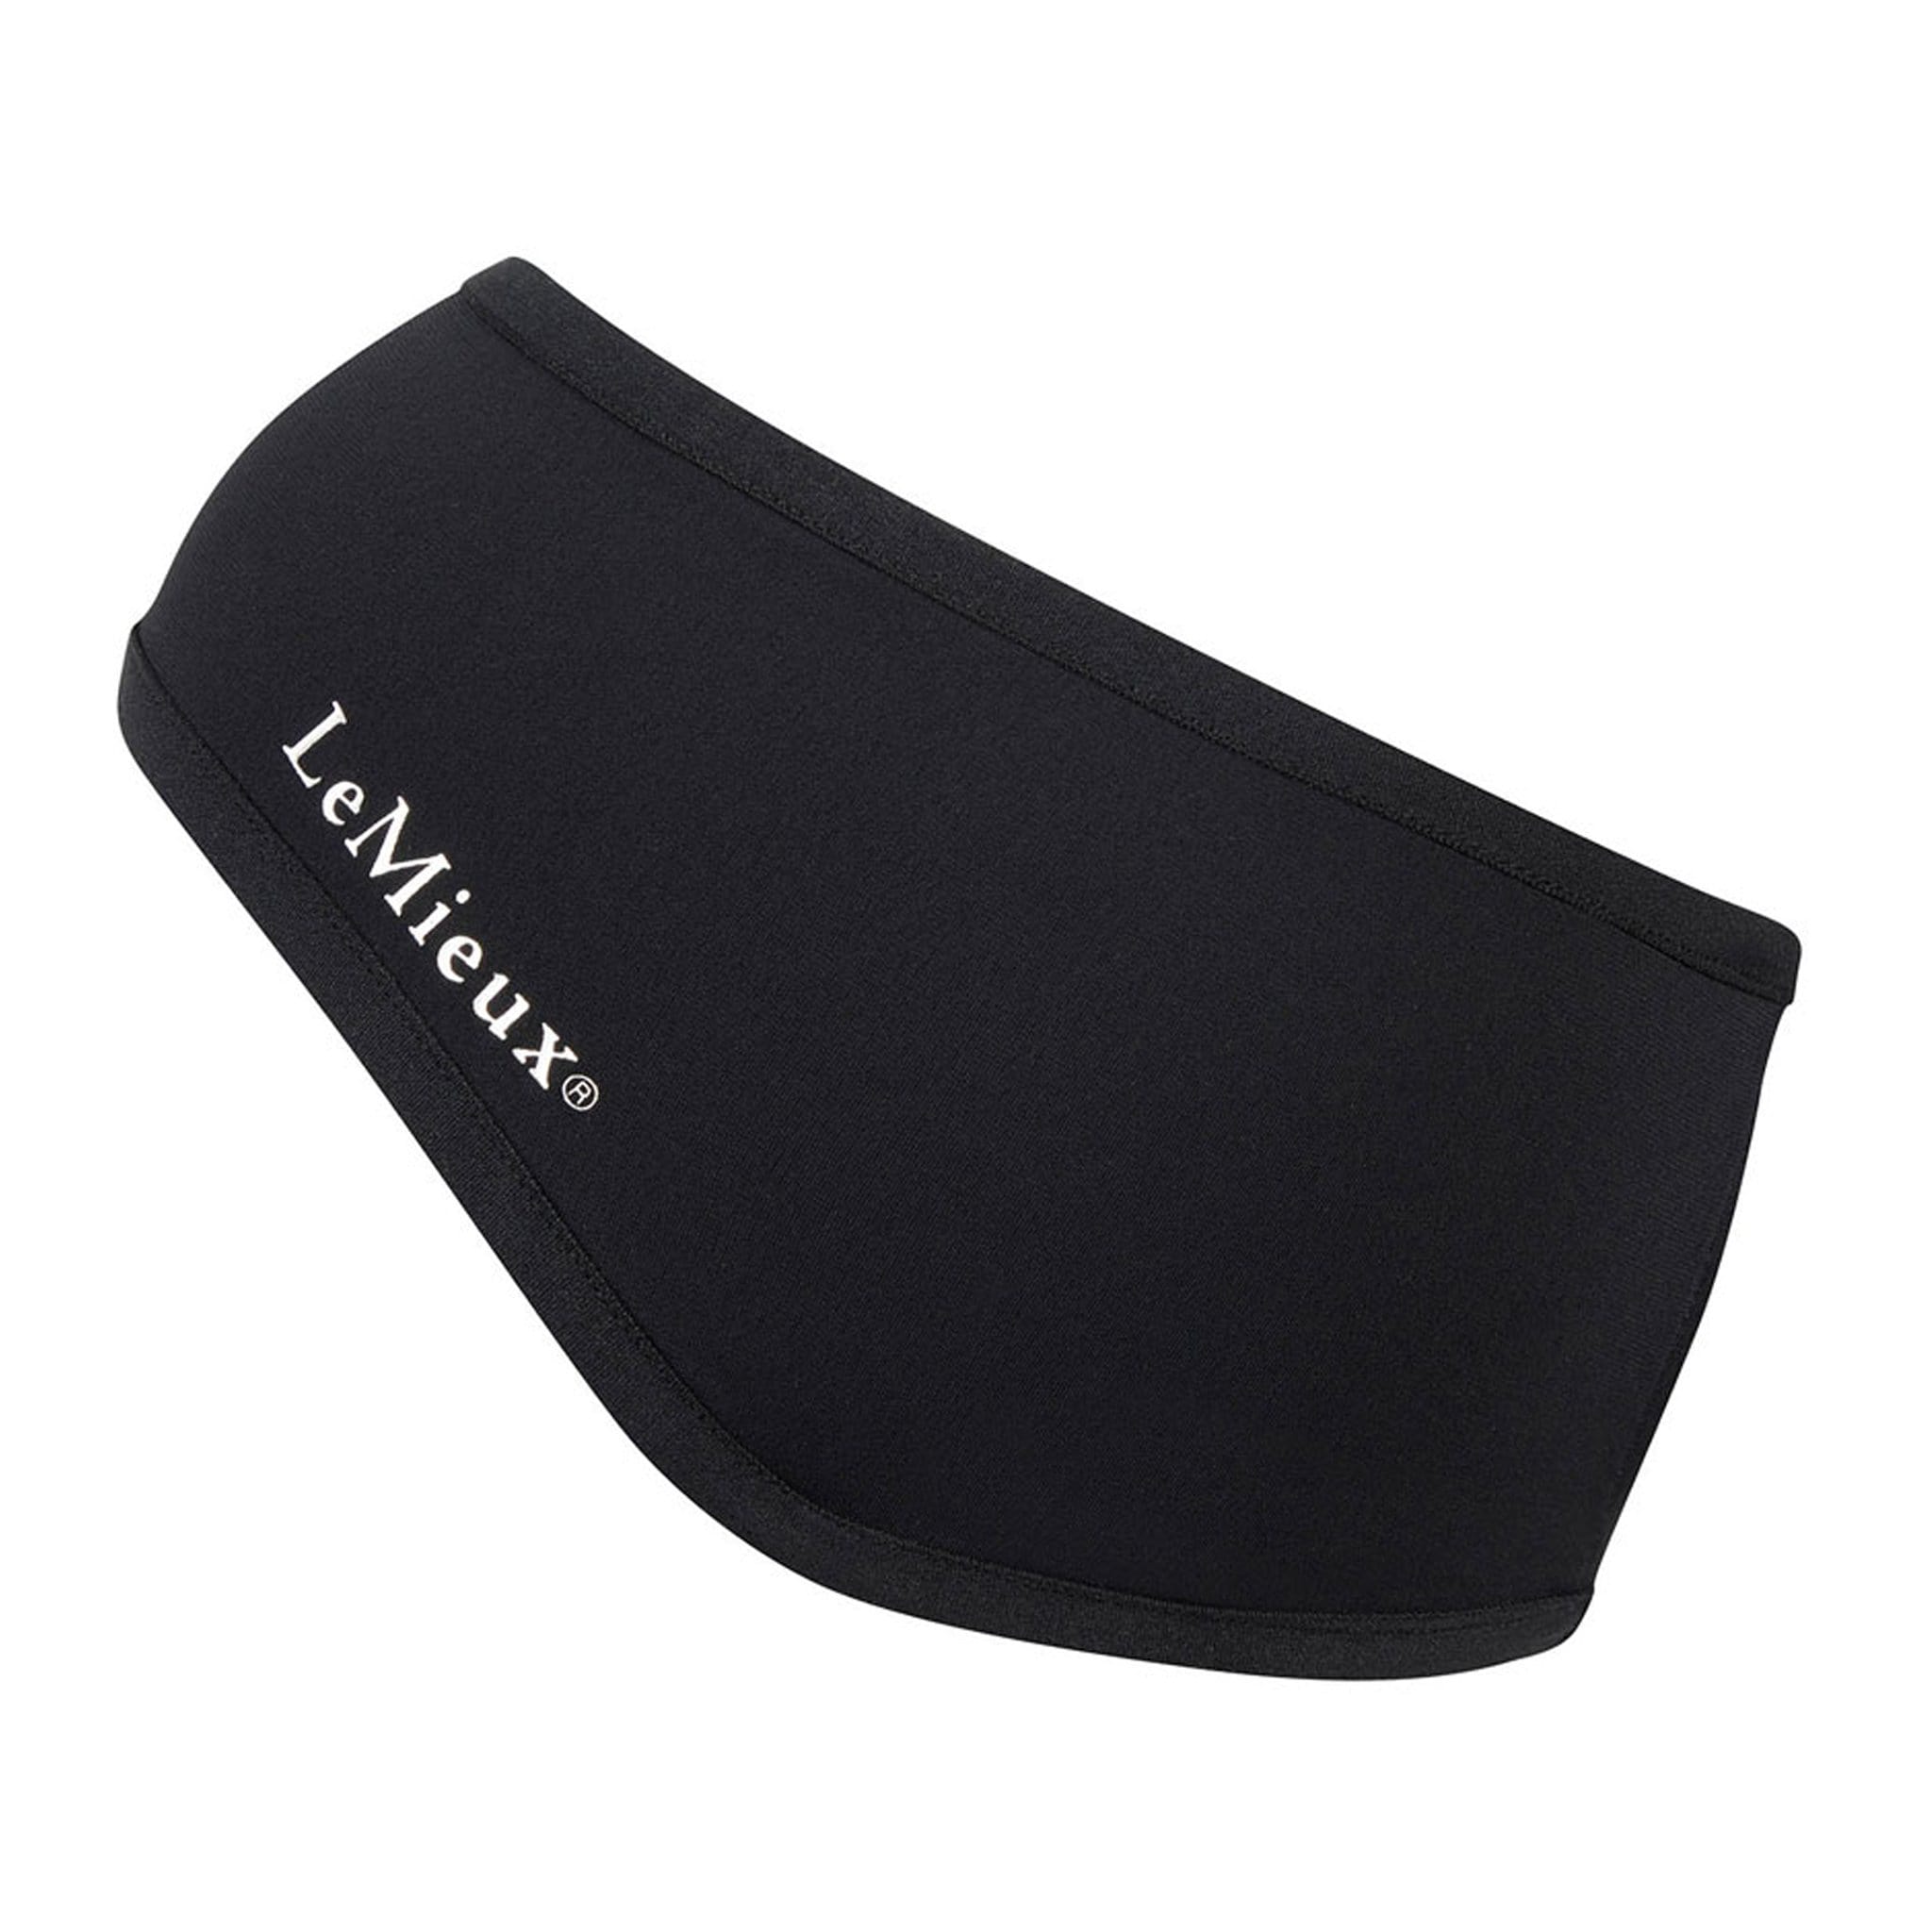 LeMieux Ear Warmer Headband Black studio 3579